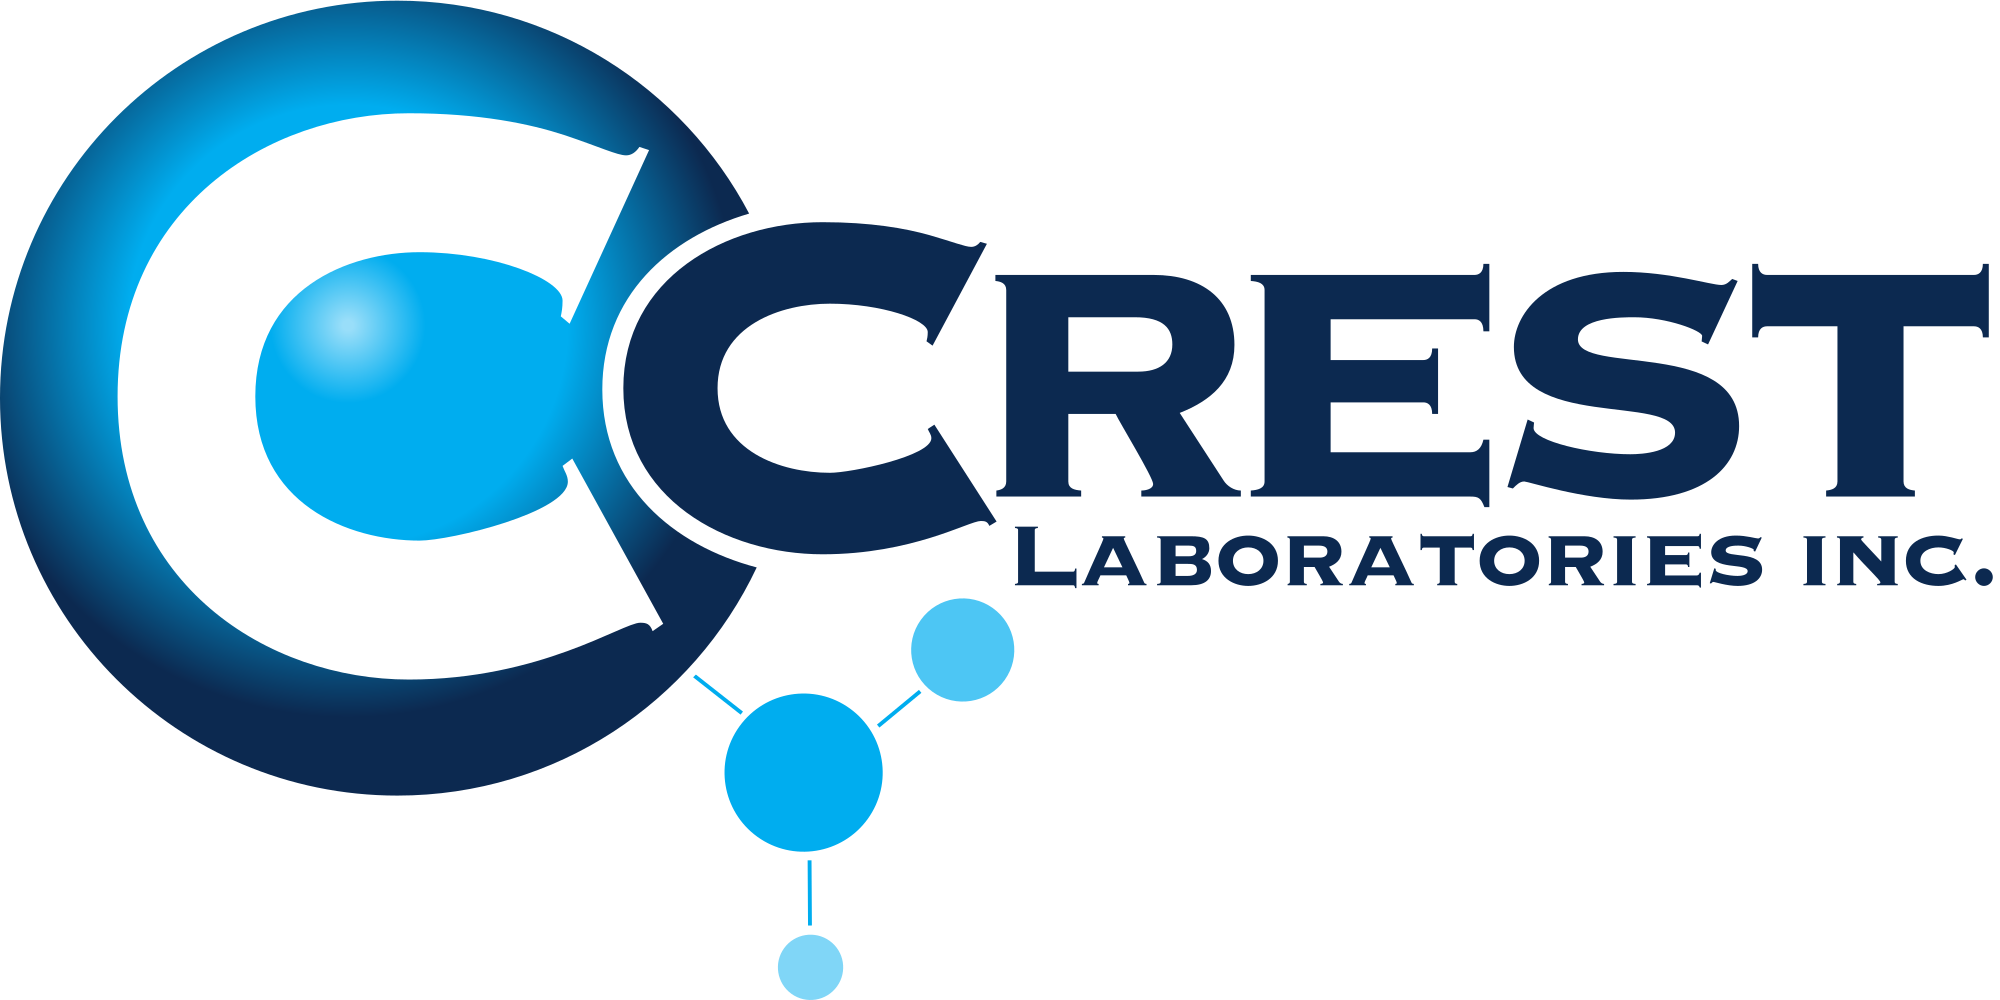 CCrest Logo